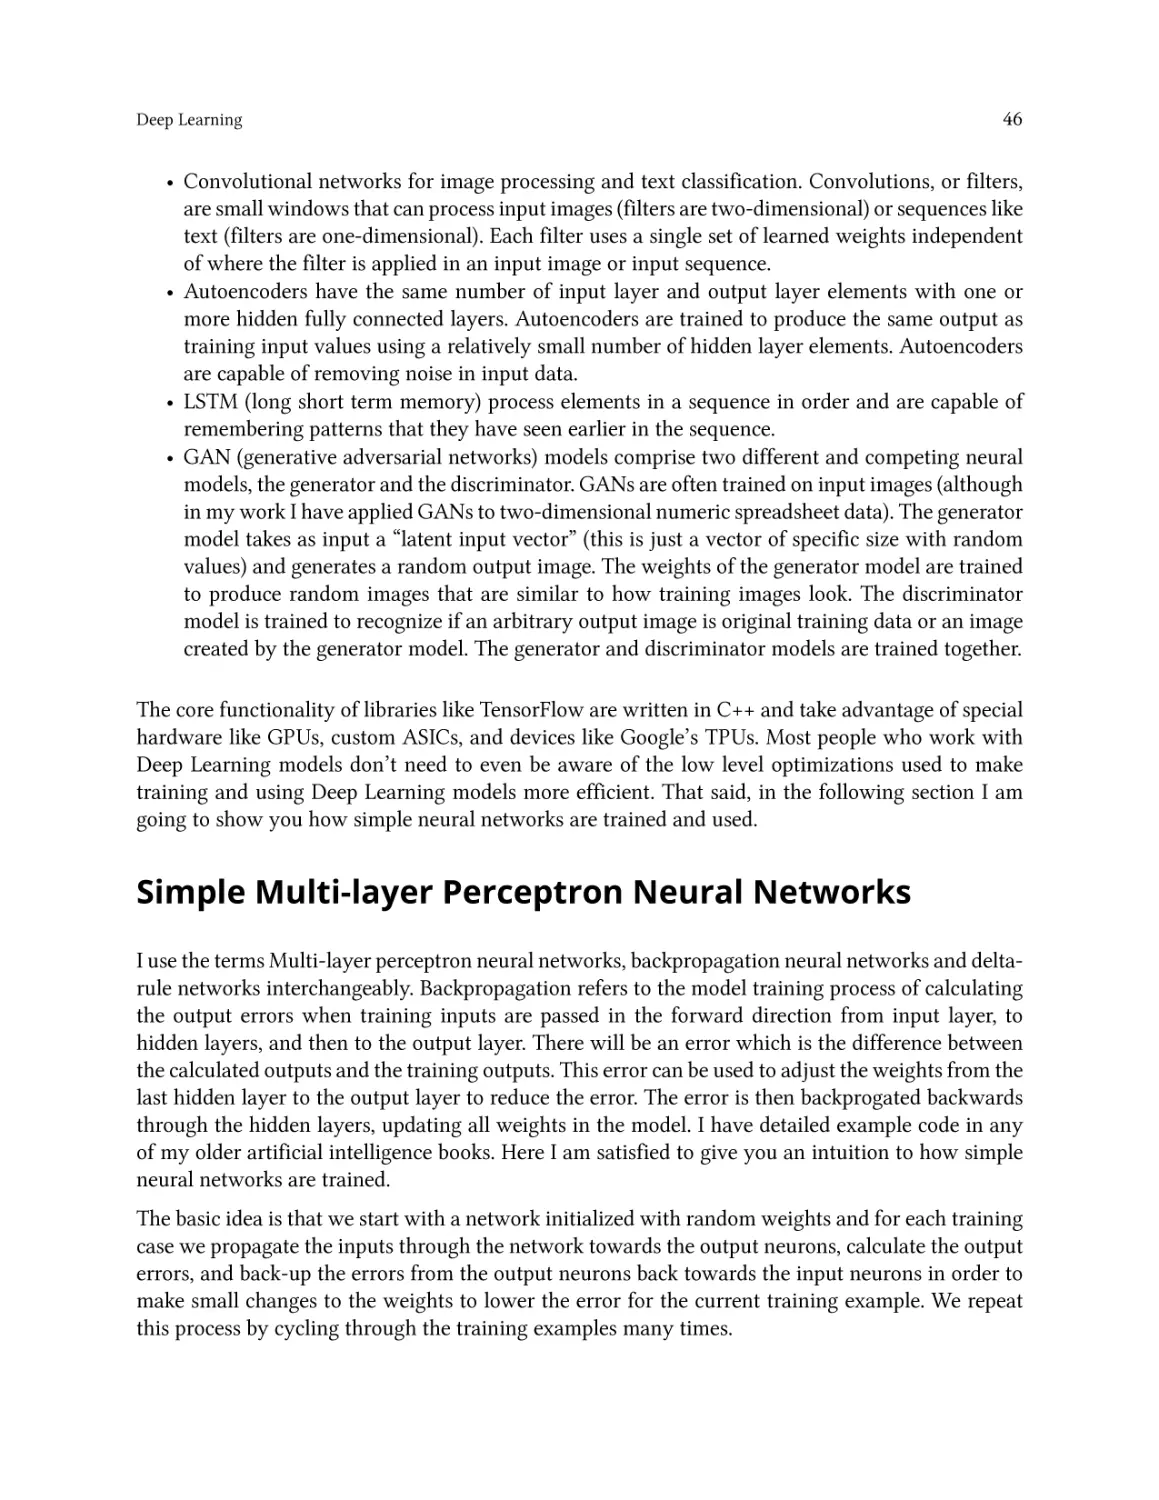 Simple Multi-layer Perceptron Neural Networks